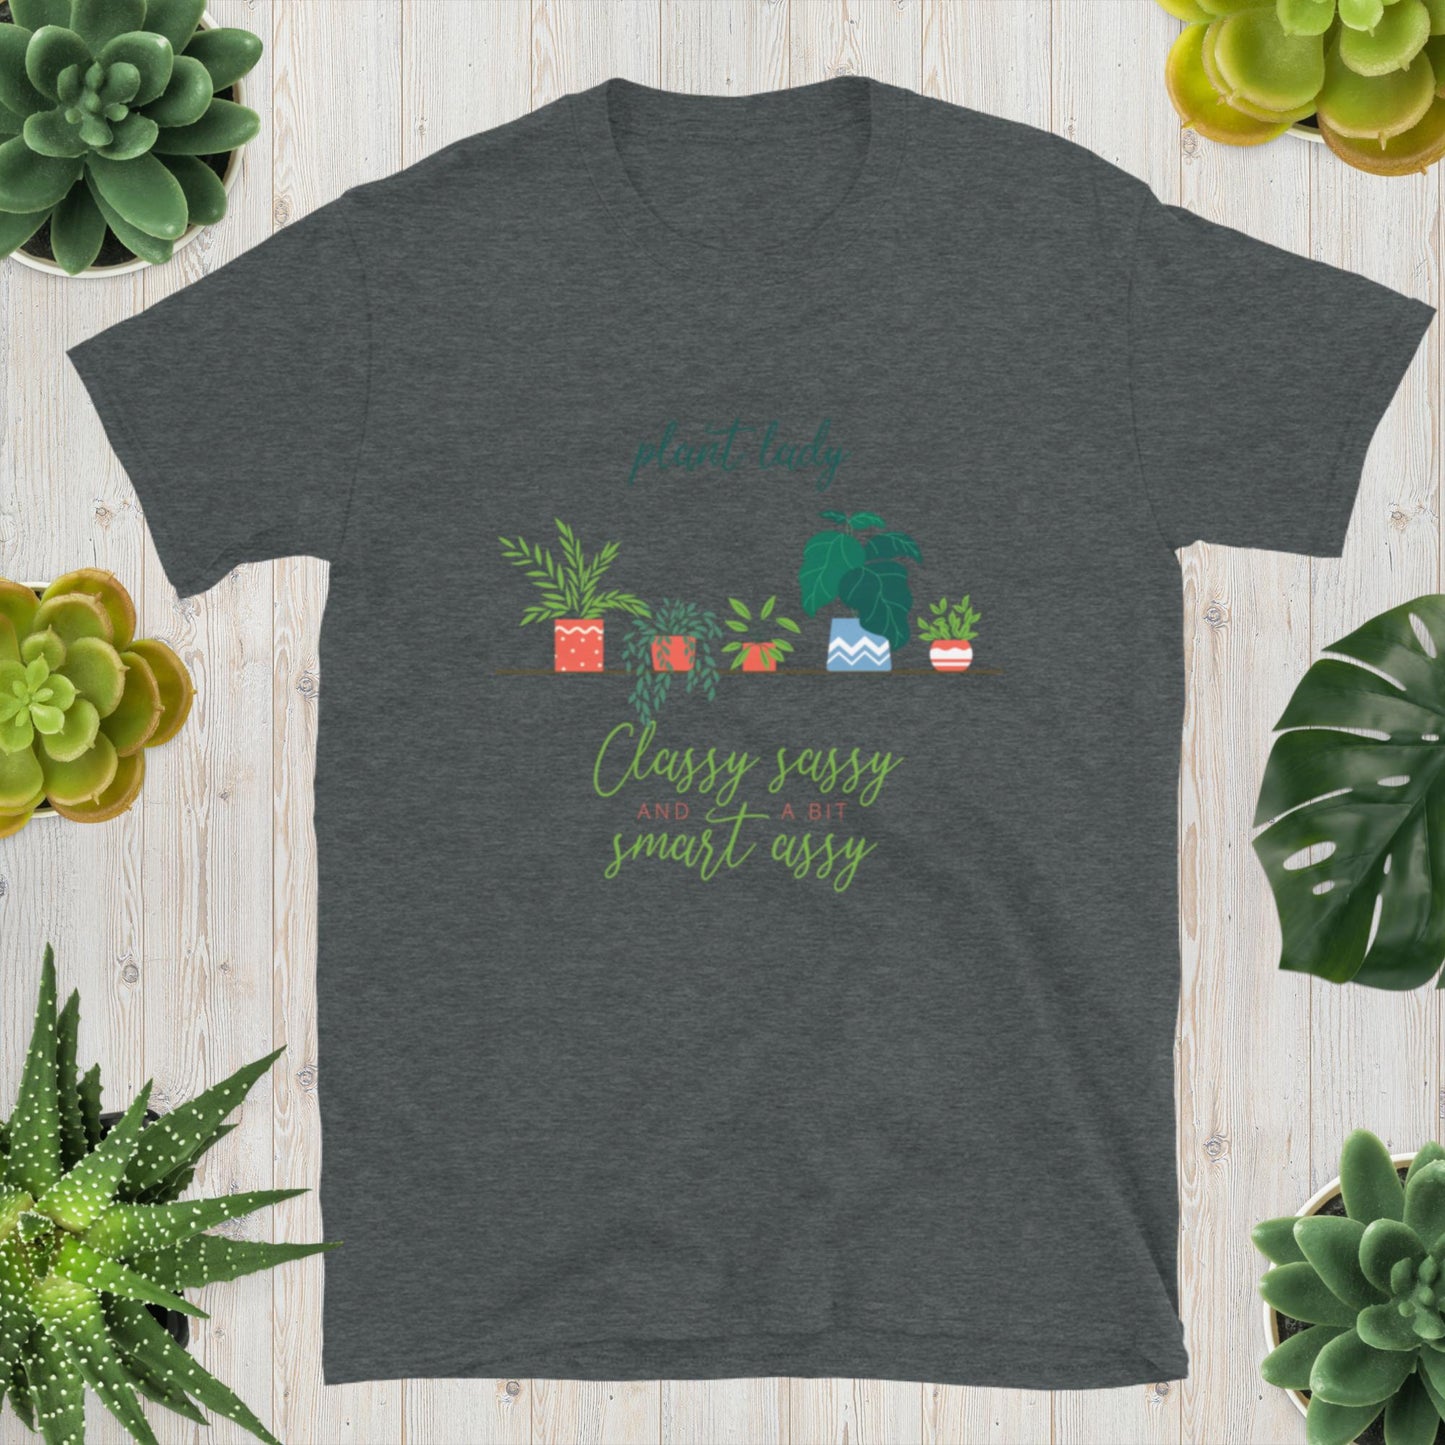 Plant Lady Shirt